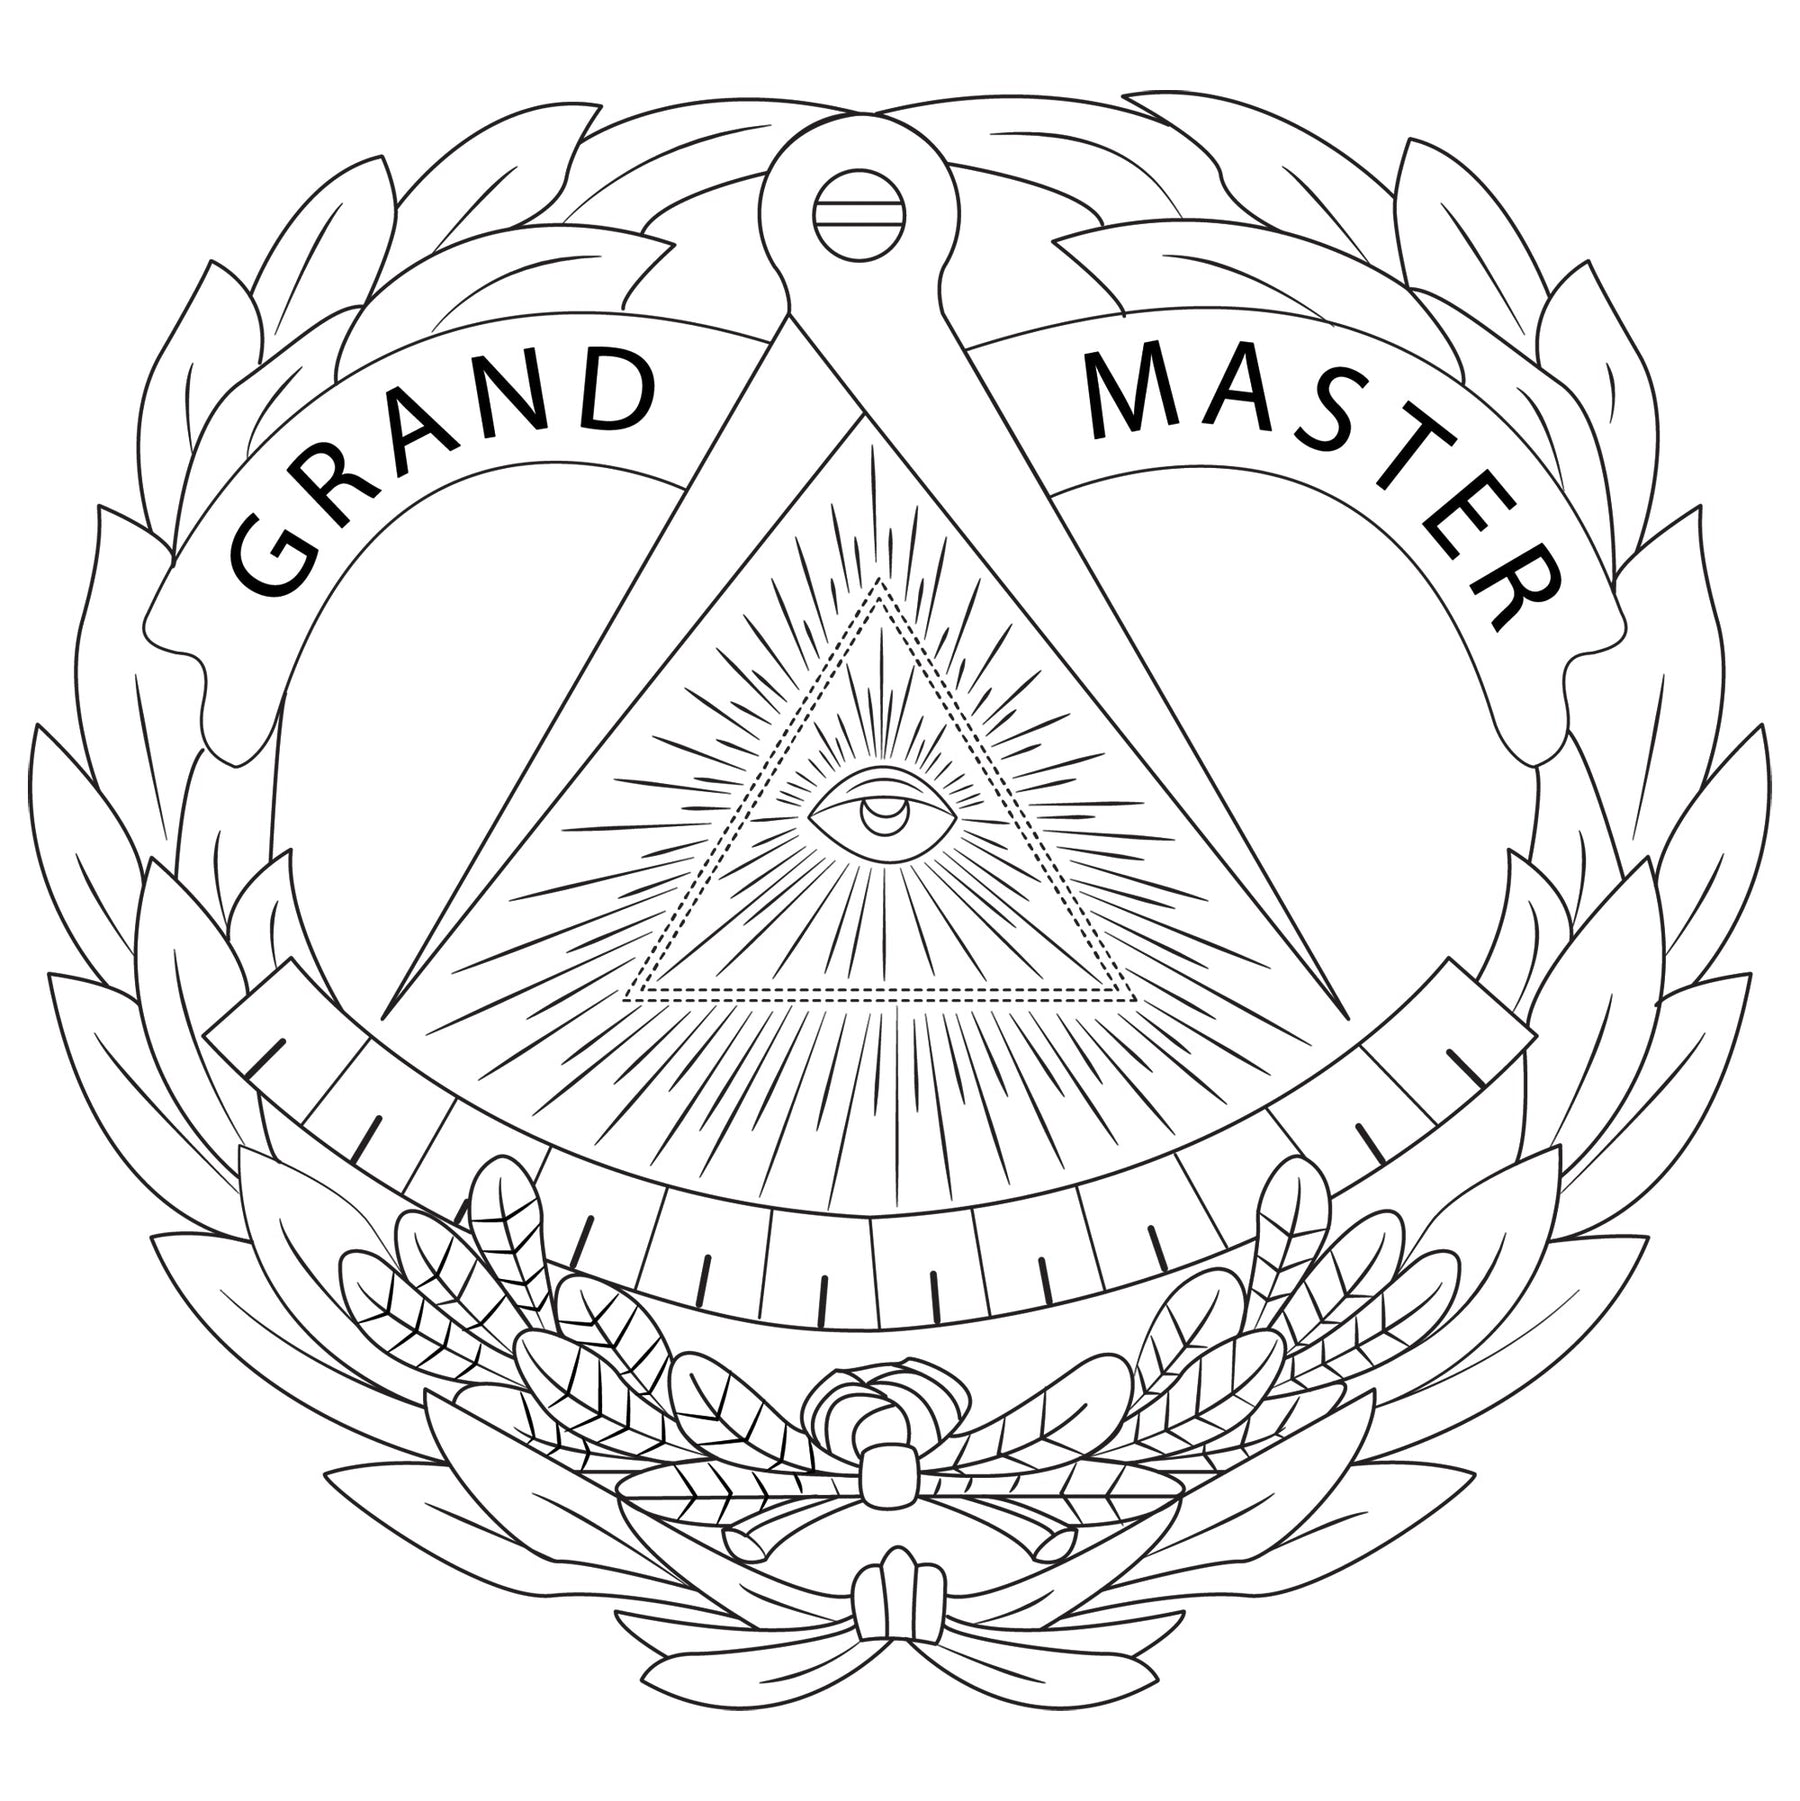 Grand Master Blue Lodge Clock - Vinyl Record - Bricks Masons